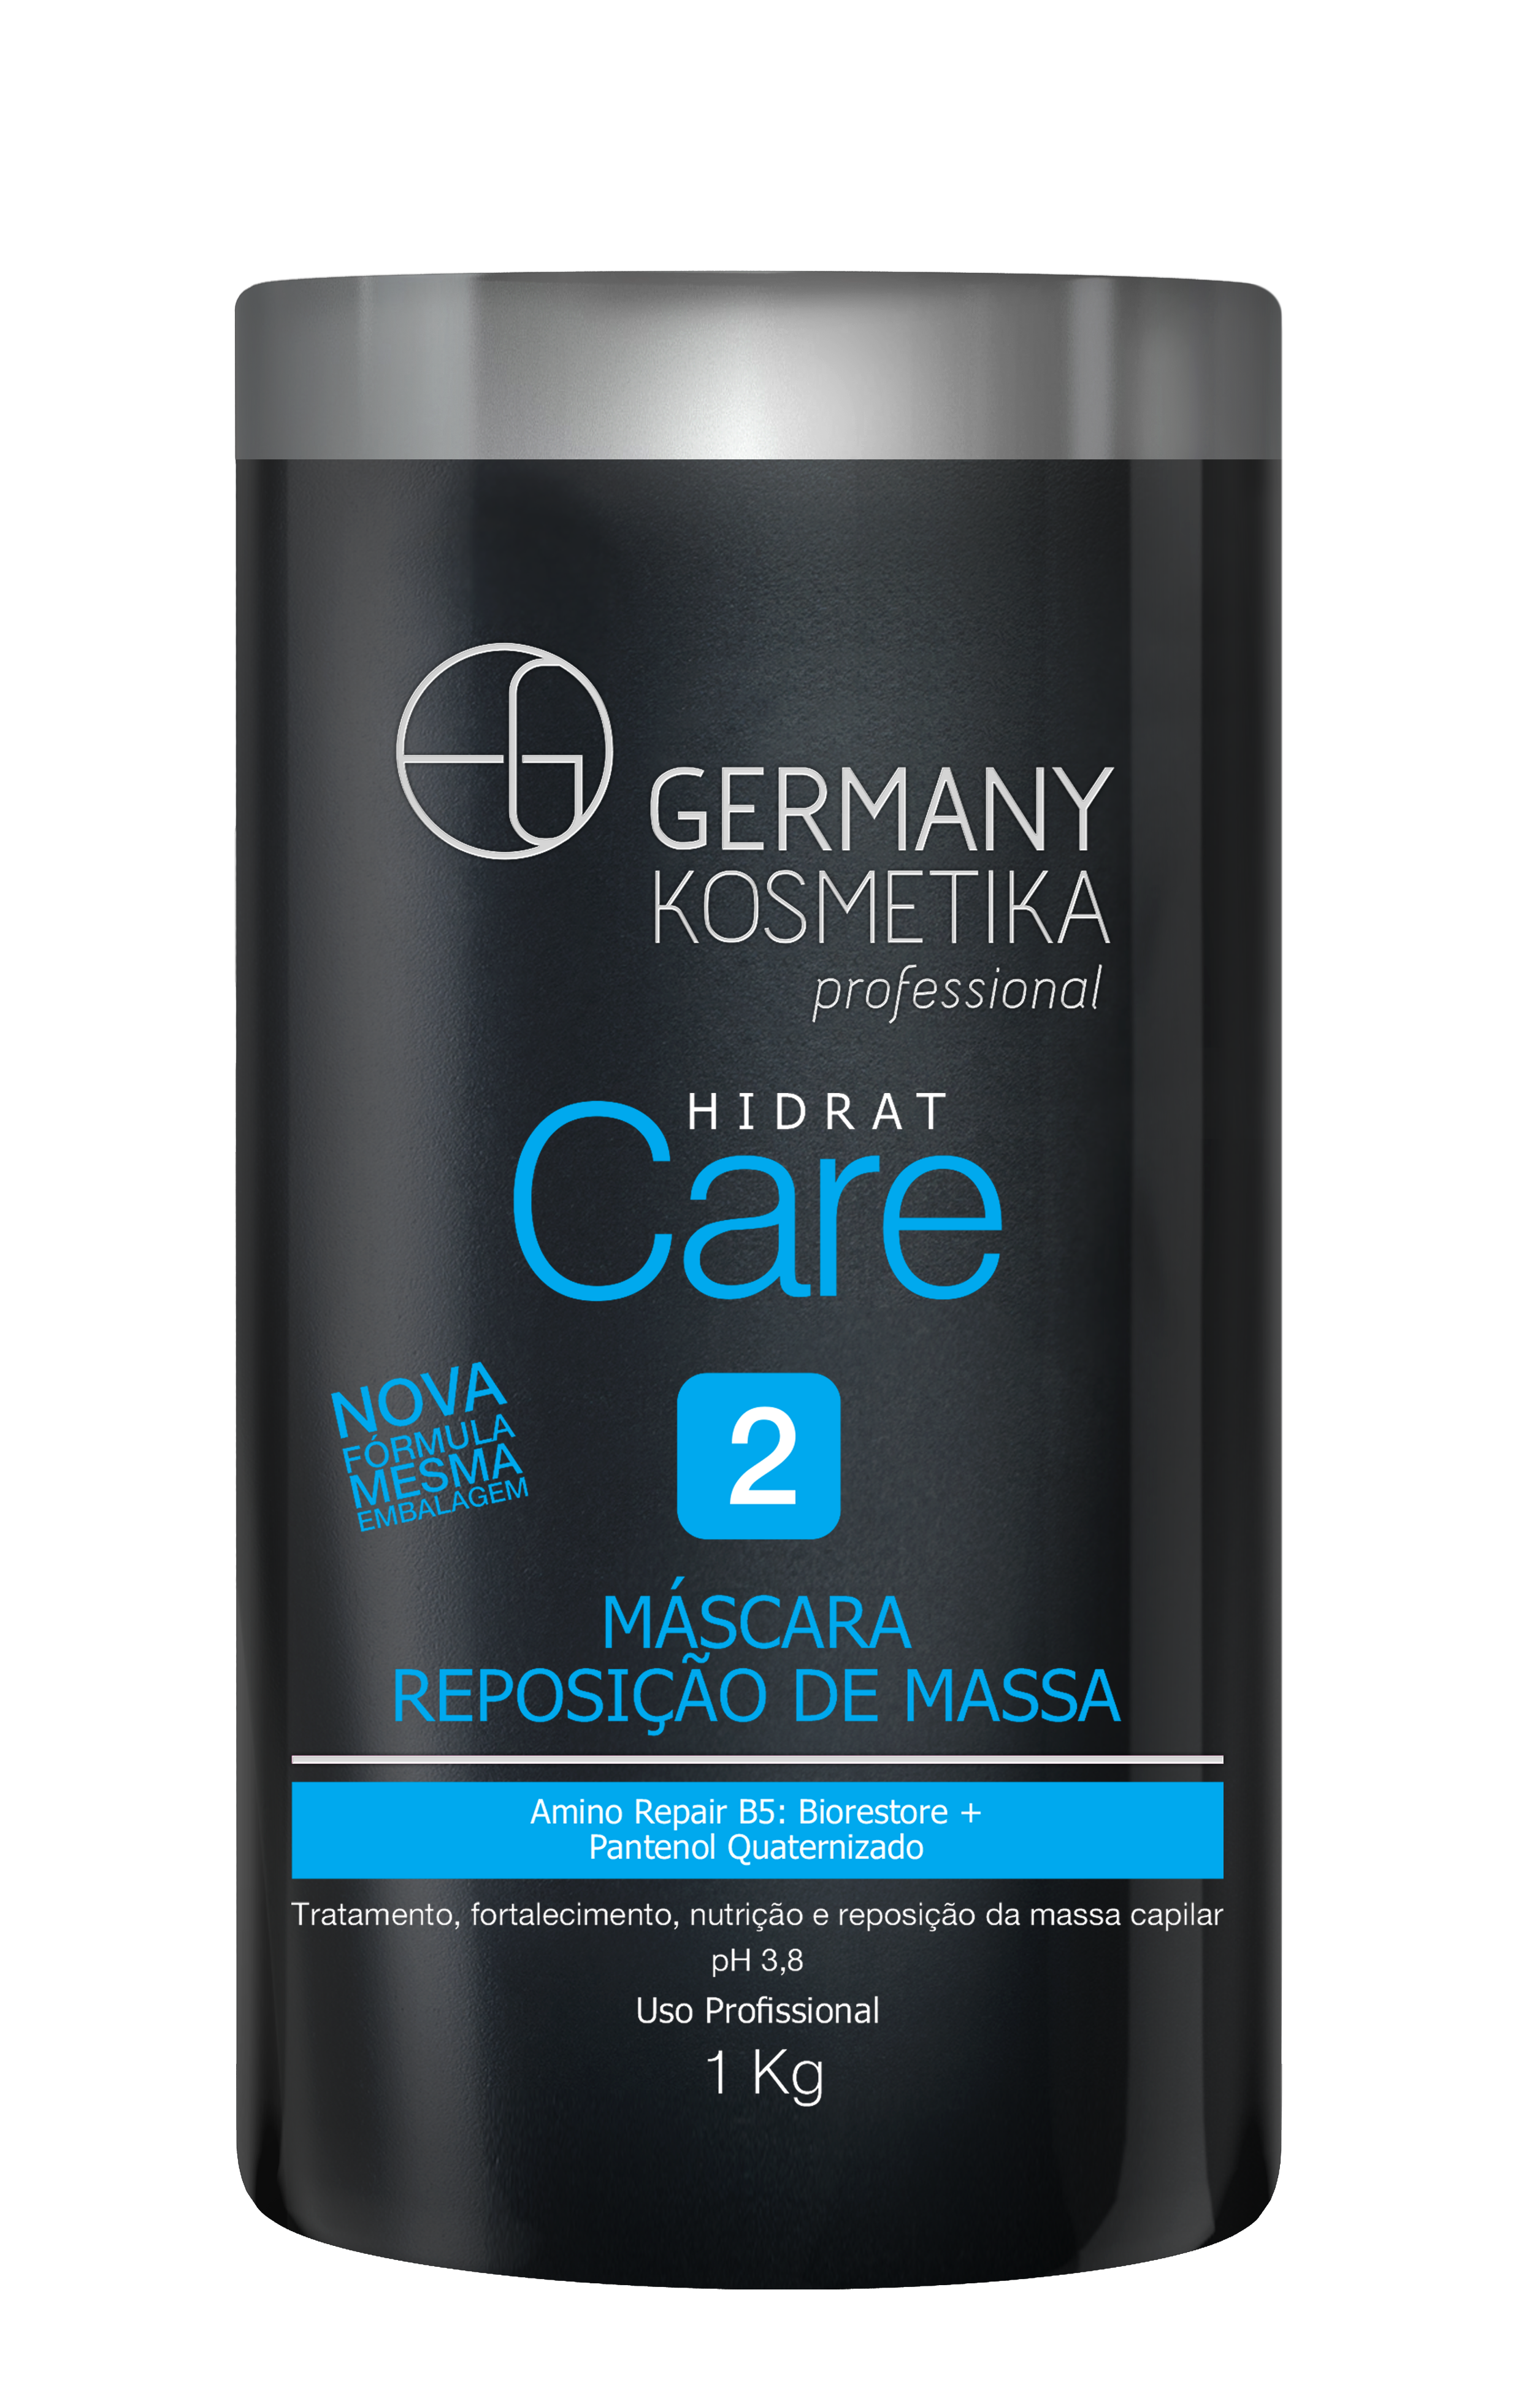 GERMANY Hidrat Care Reposicao Massa